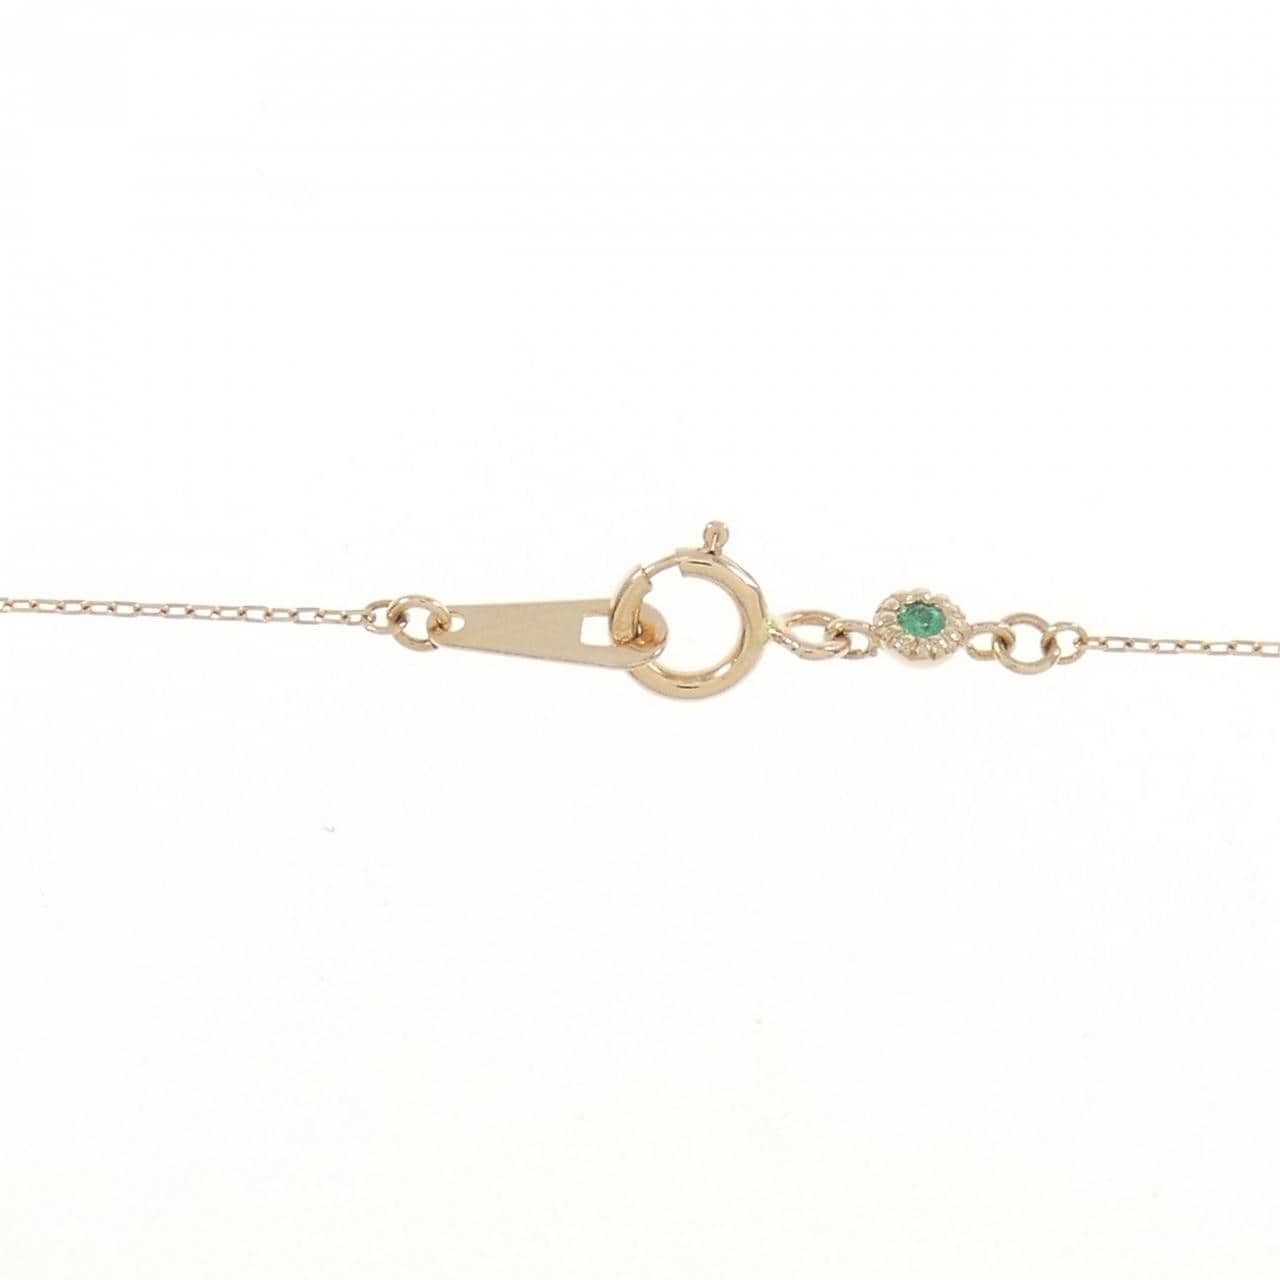 Sirena Azzurro Garnet necklace